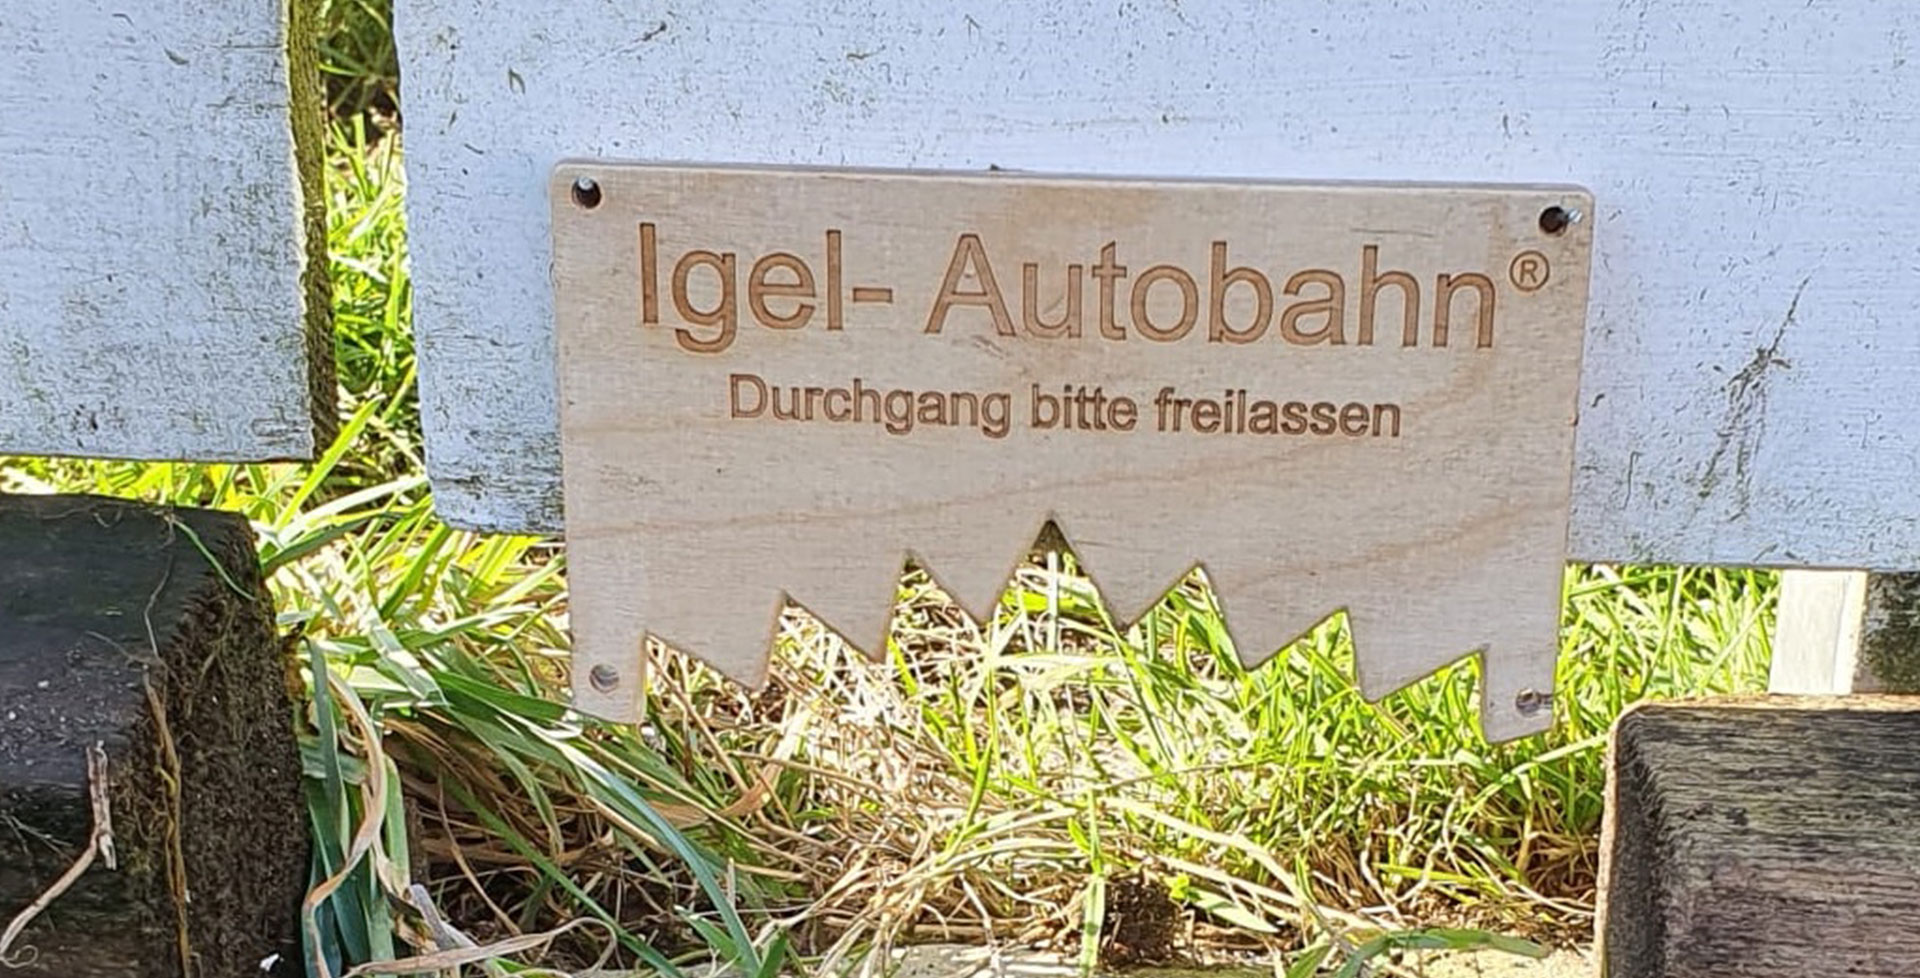 Interview: Igel-Autobahn